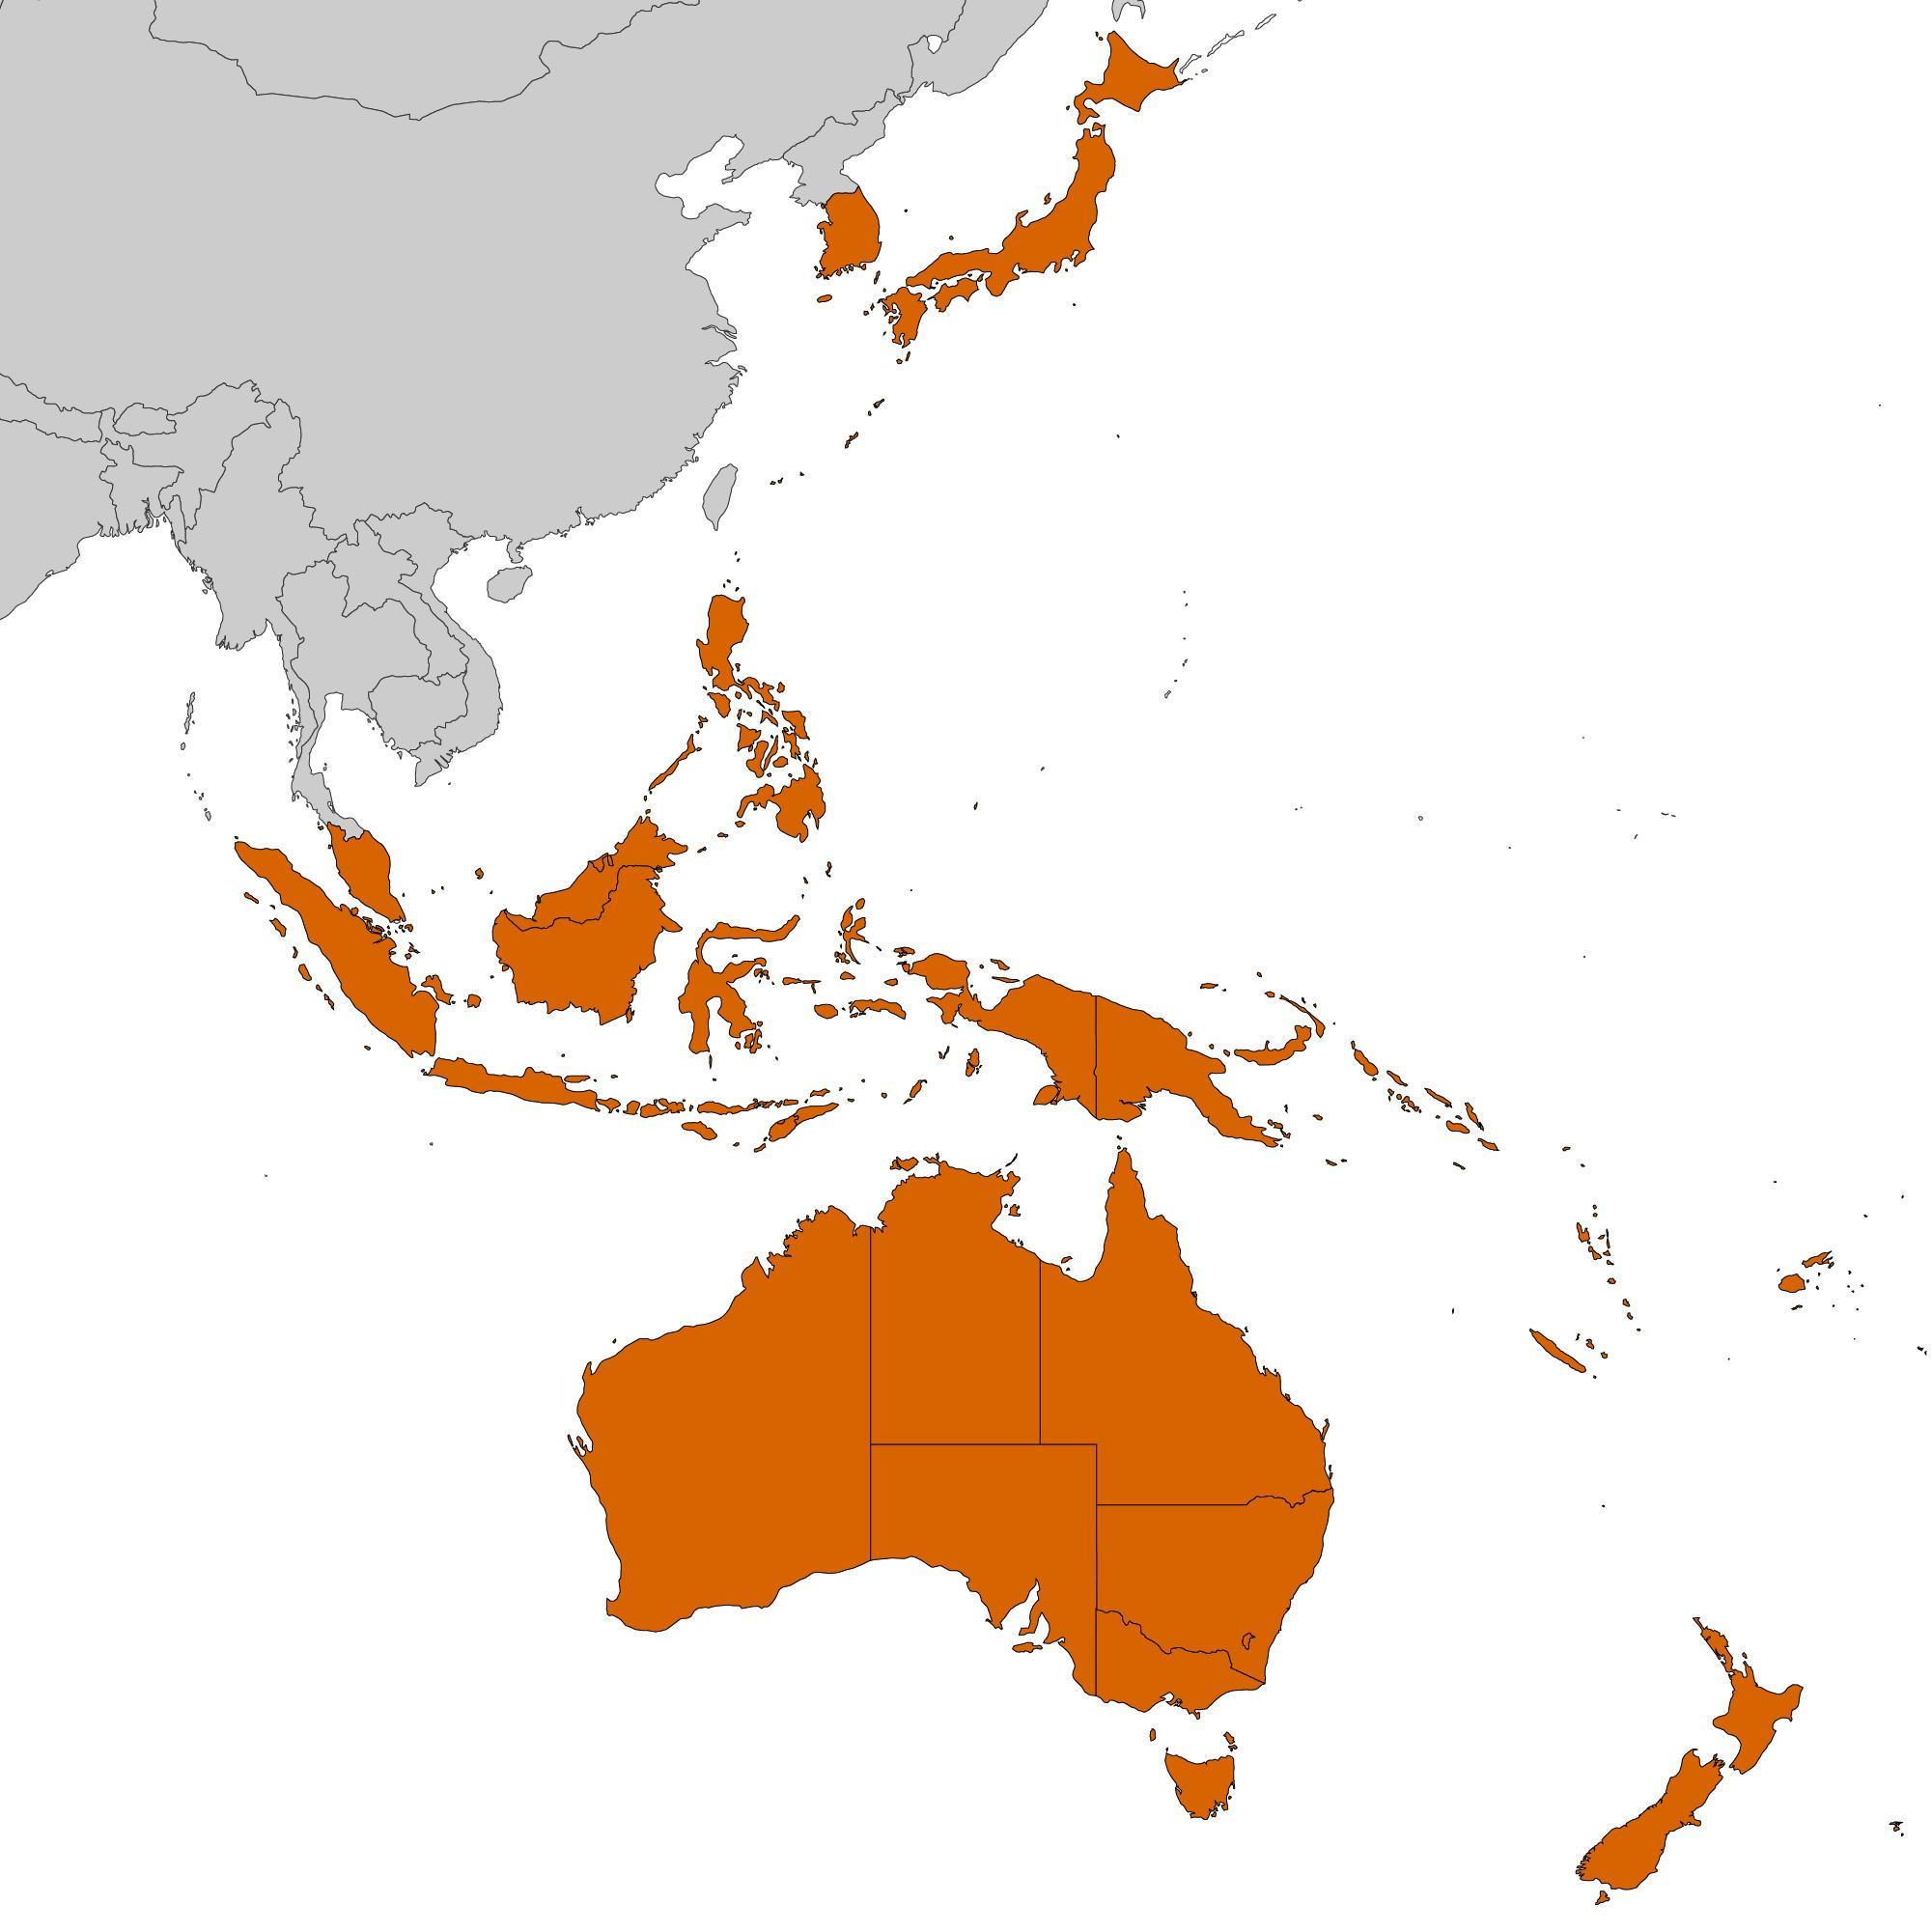 Asia-Pacific Region map